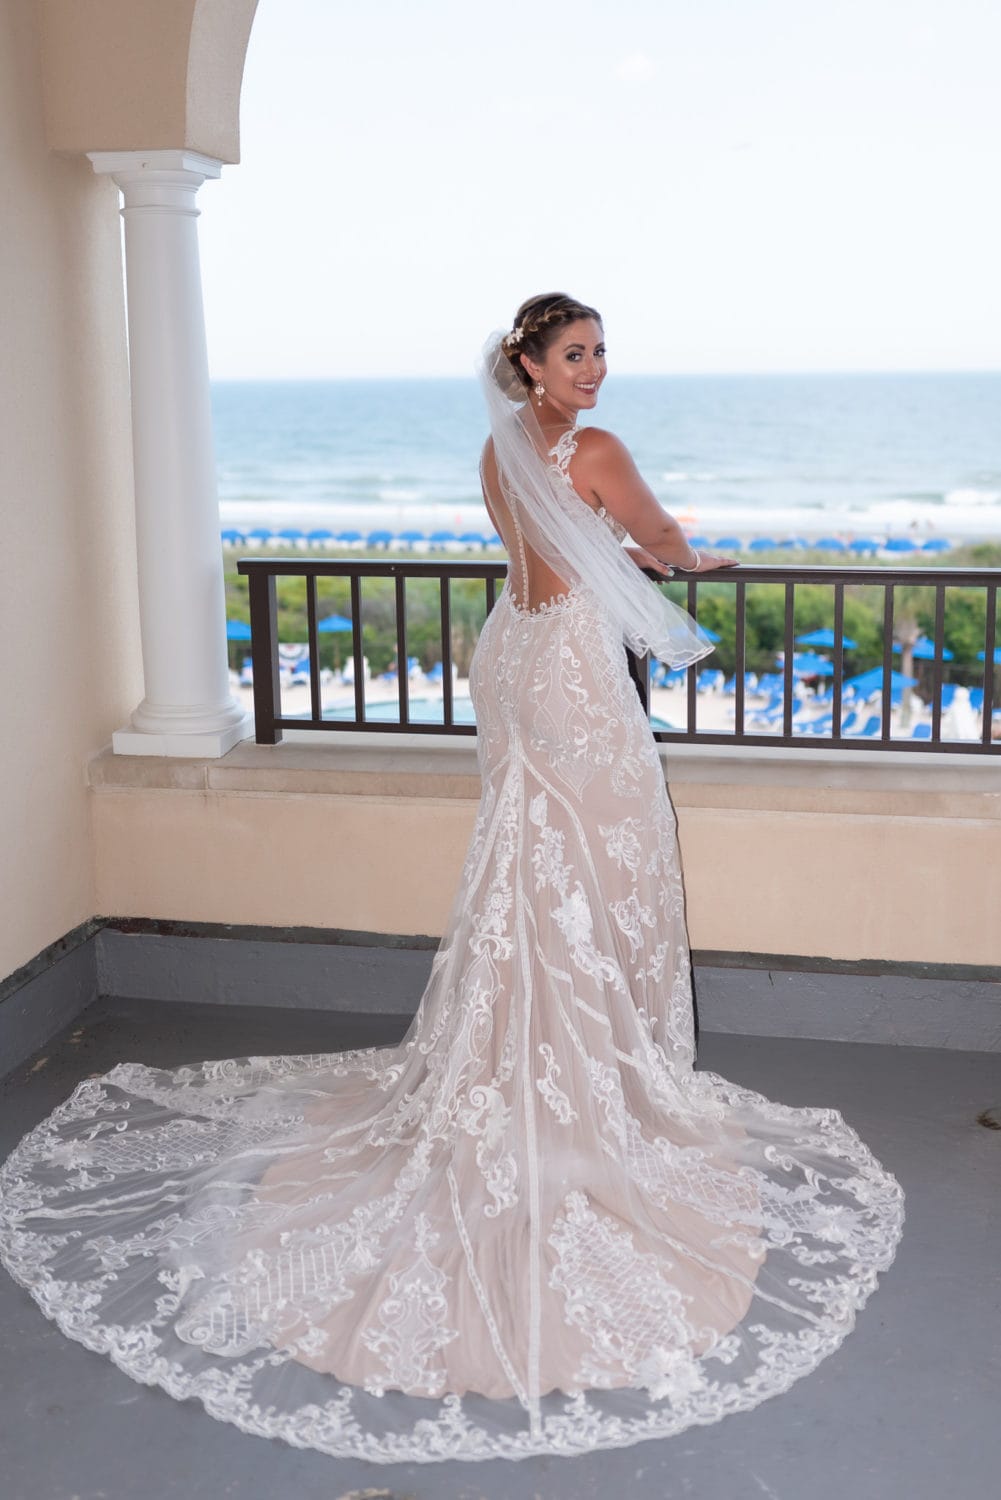 Bride standing on the balcony Grande Dunes Ocean Club - Myrtle Beach